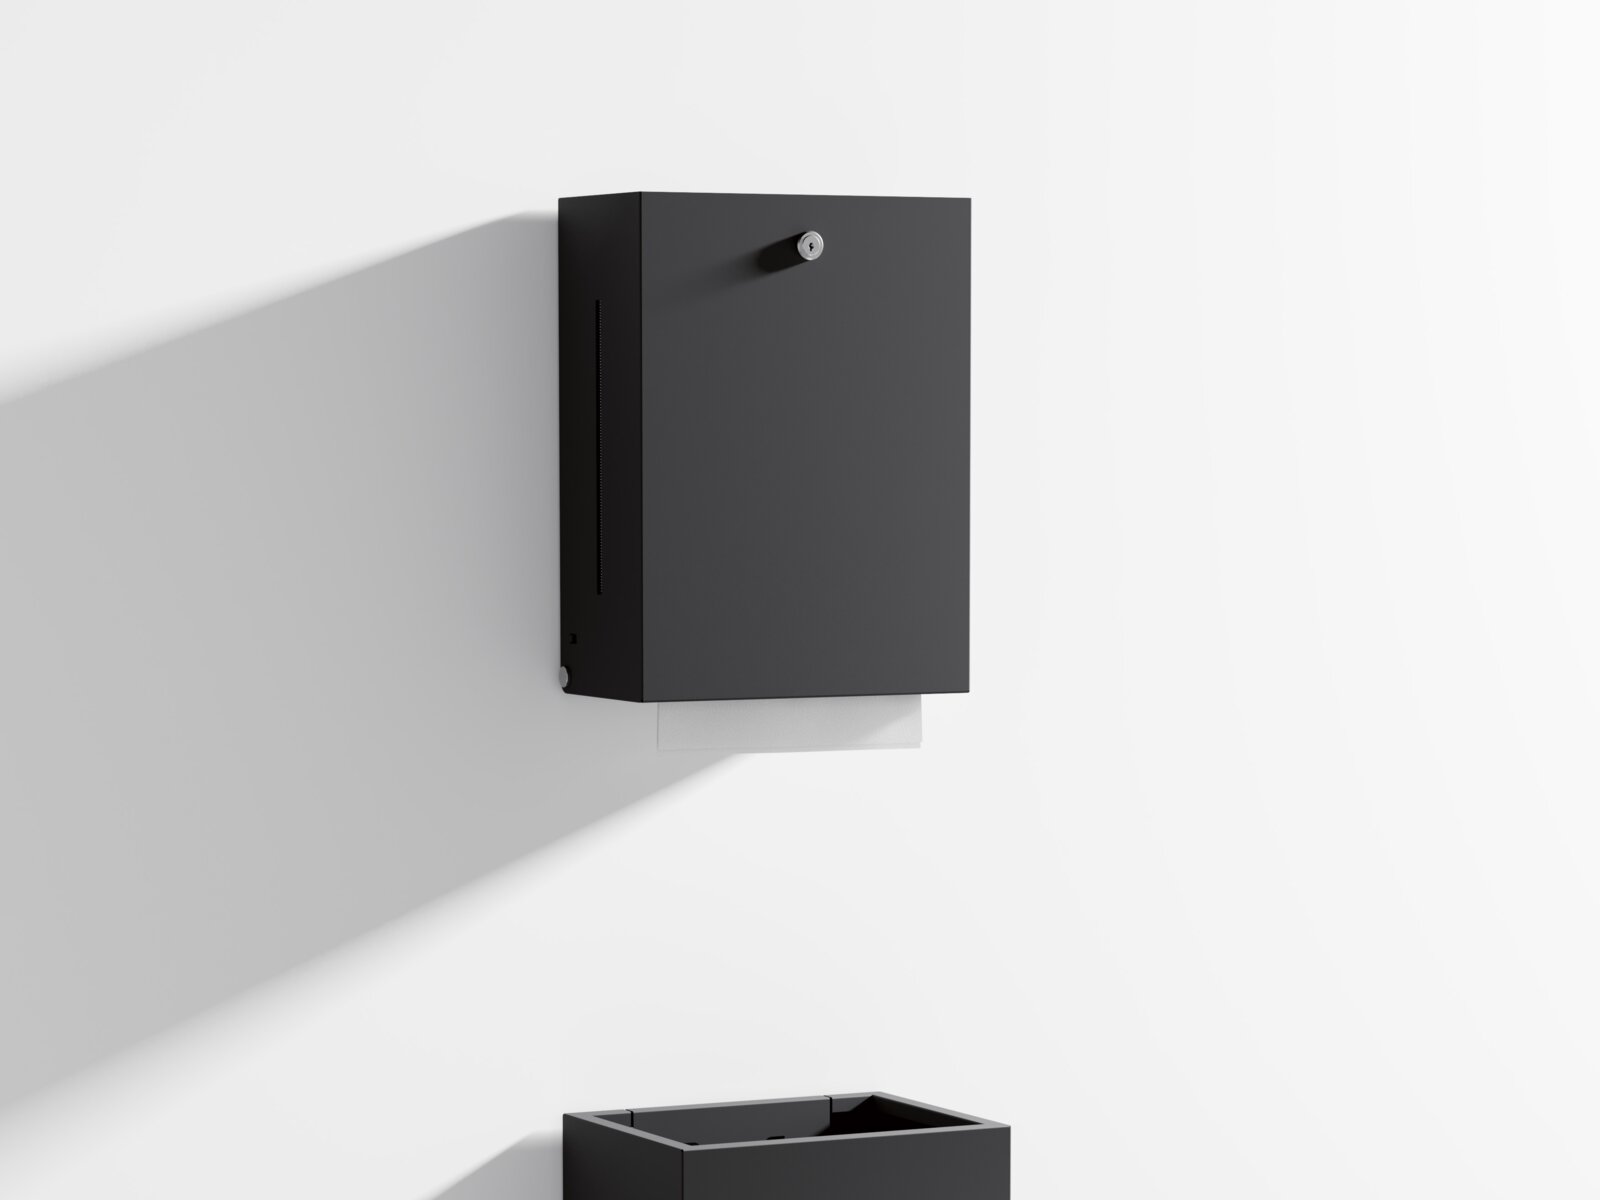 Paper towel dispenser and waste bin with angular design in matt black stainless steel